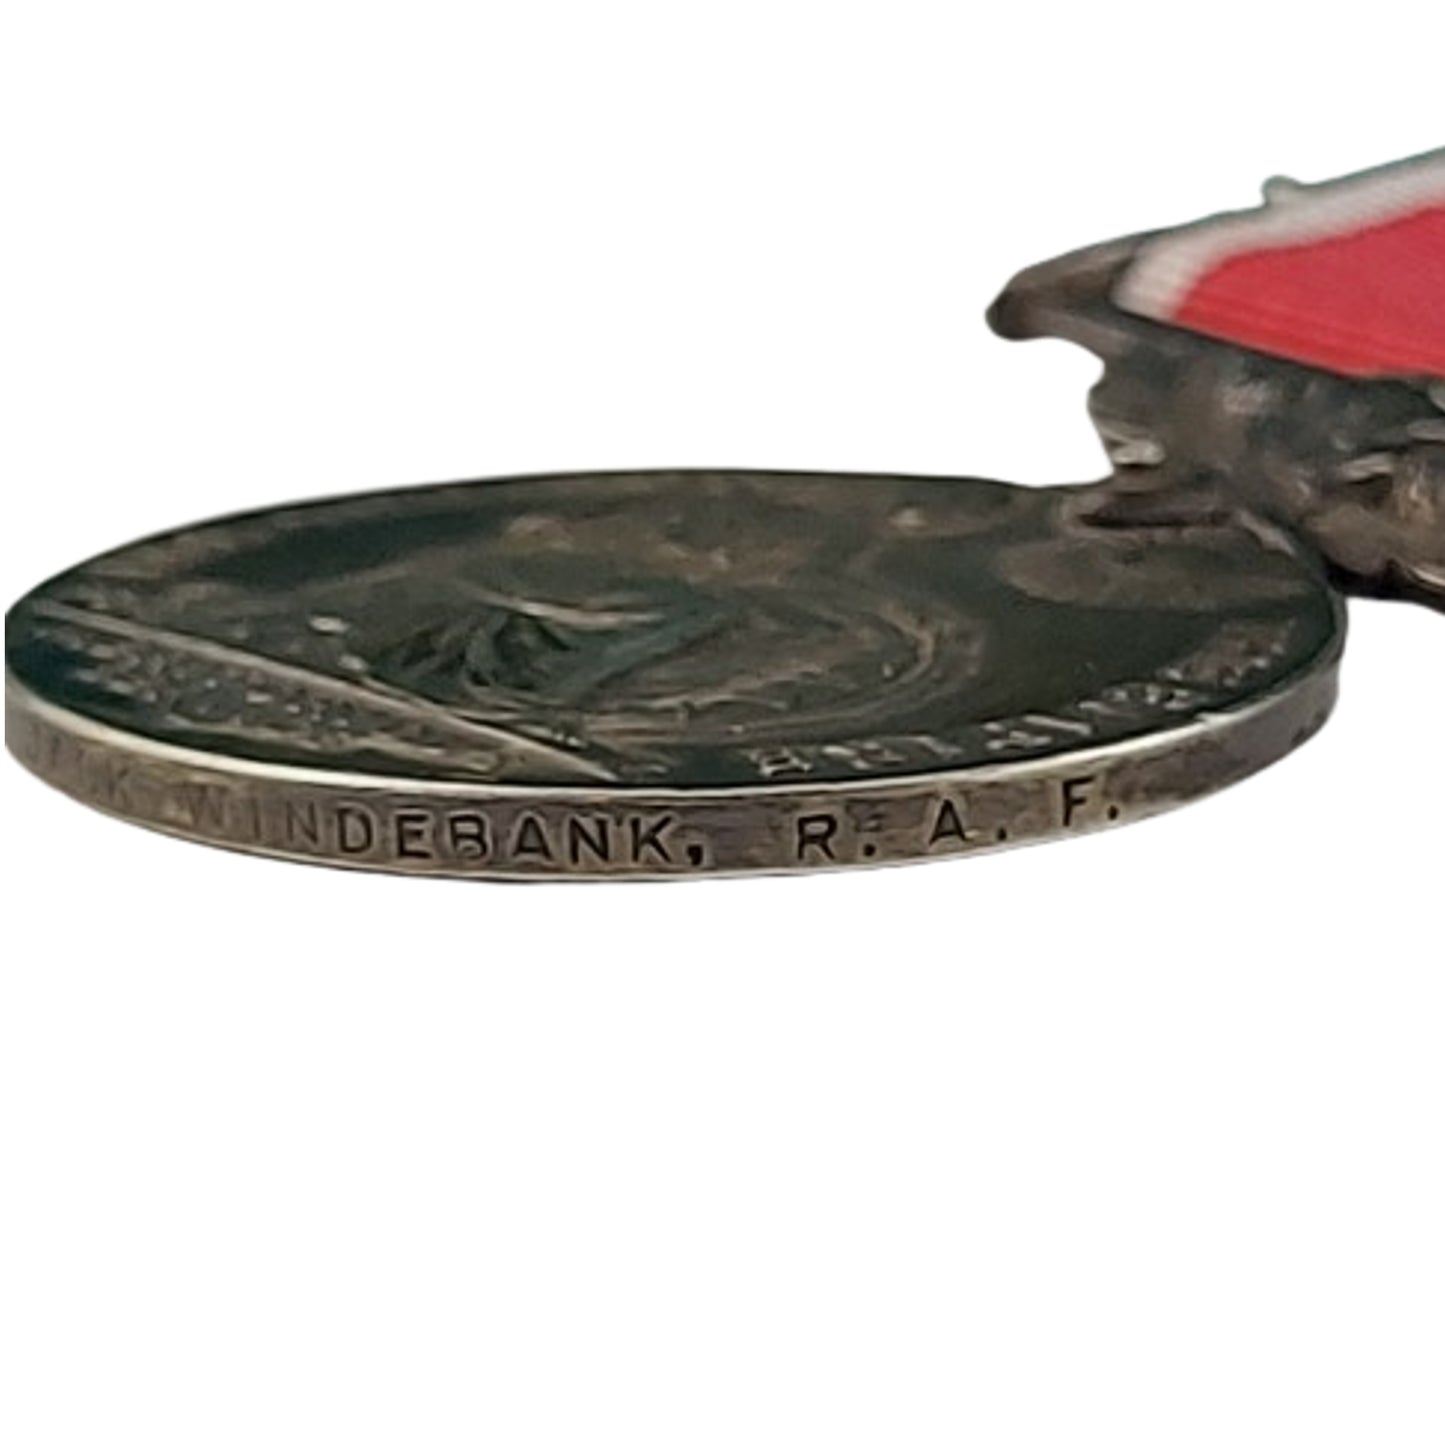 Cased QEII RAF Royal Air Force British Empire Medal